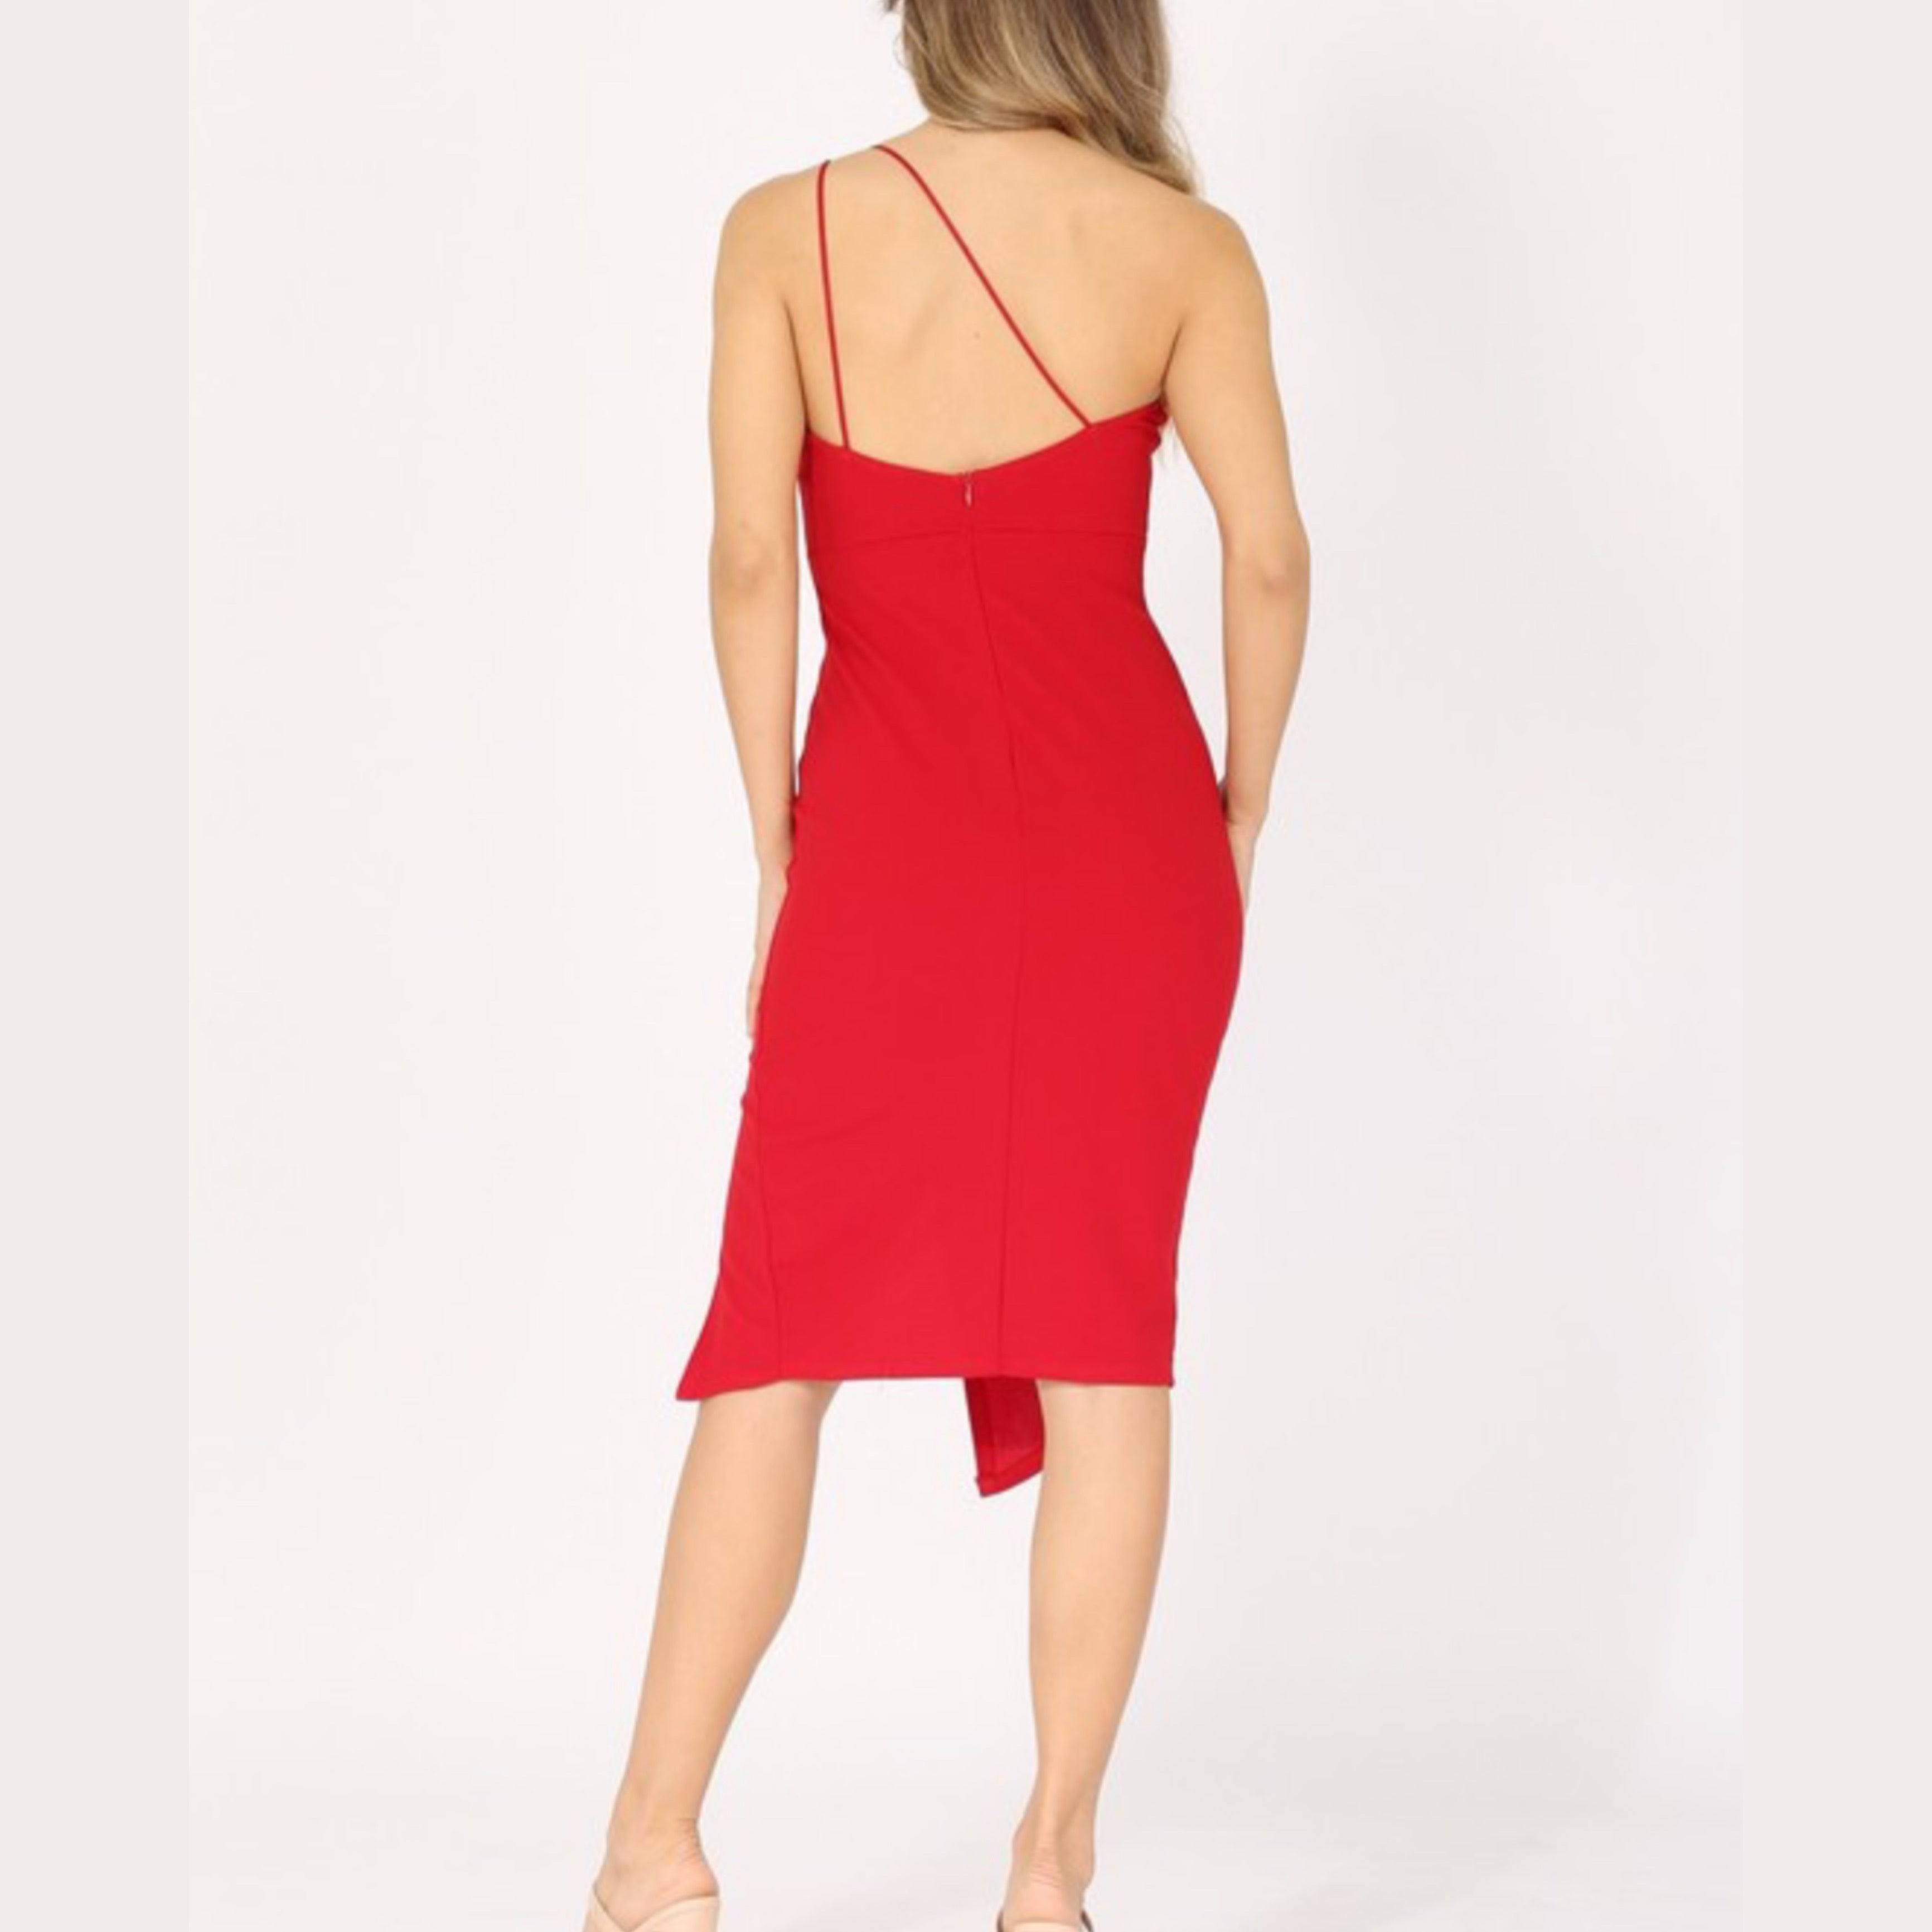 Red Asymmetrical One Shoulder Leg Slit Cocktail Dress - Rara Boutique 